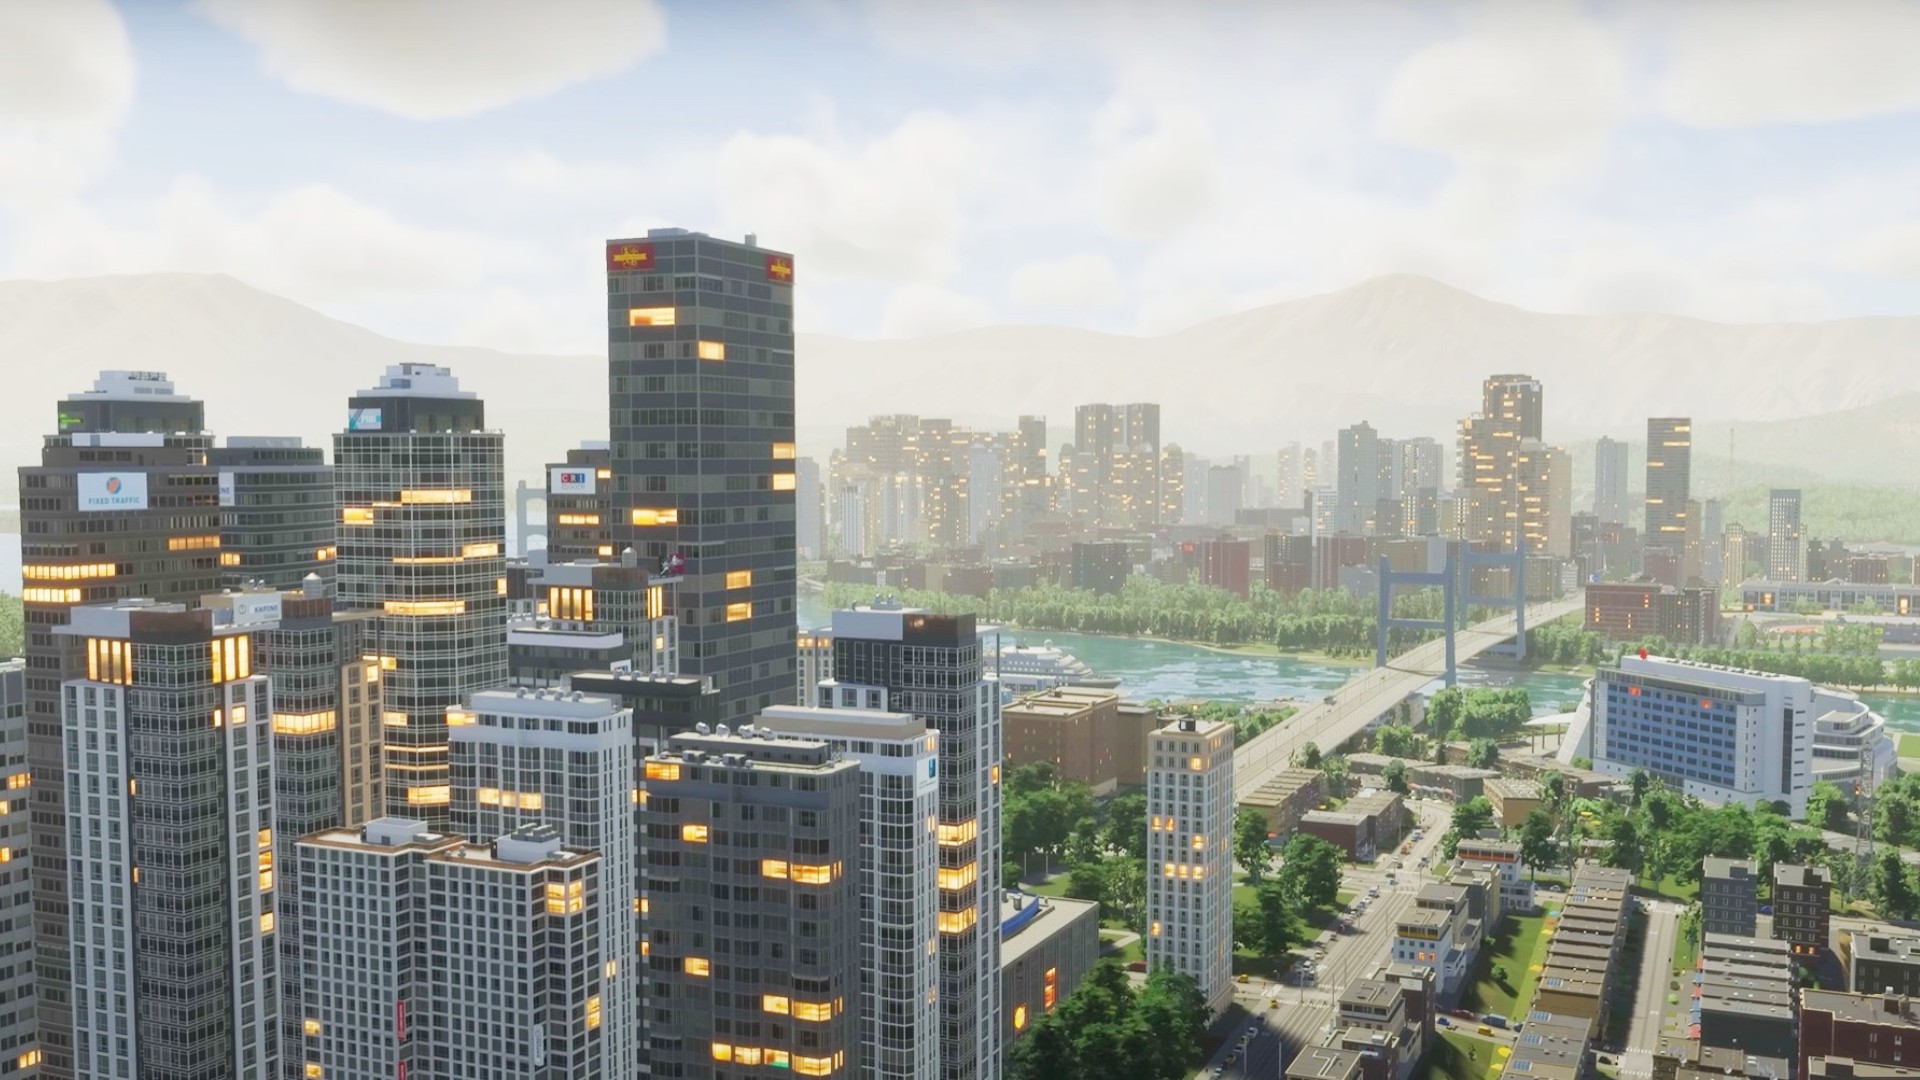 Cities Skylines 2 base game lacks a key building feature, dev confirms